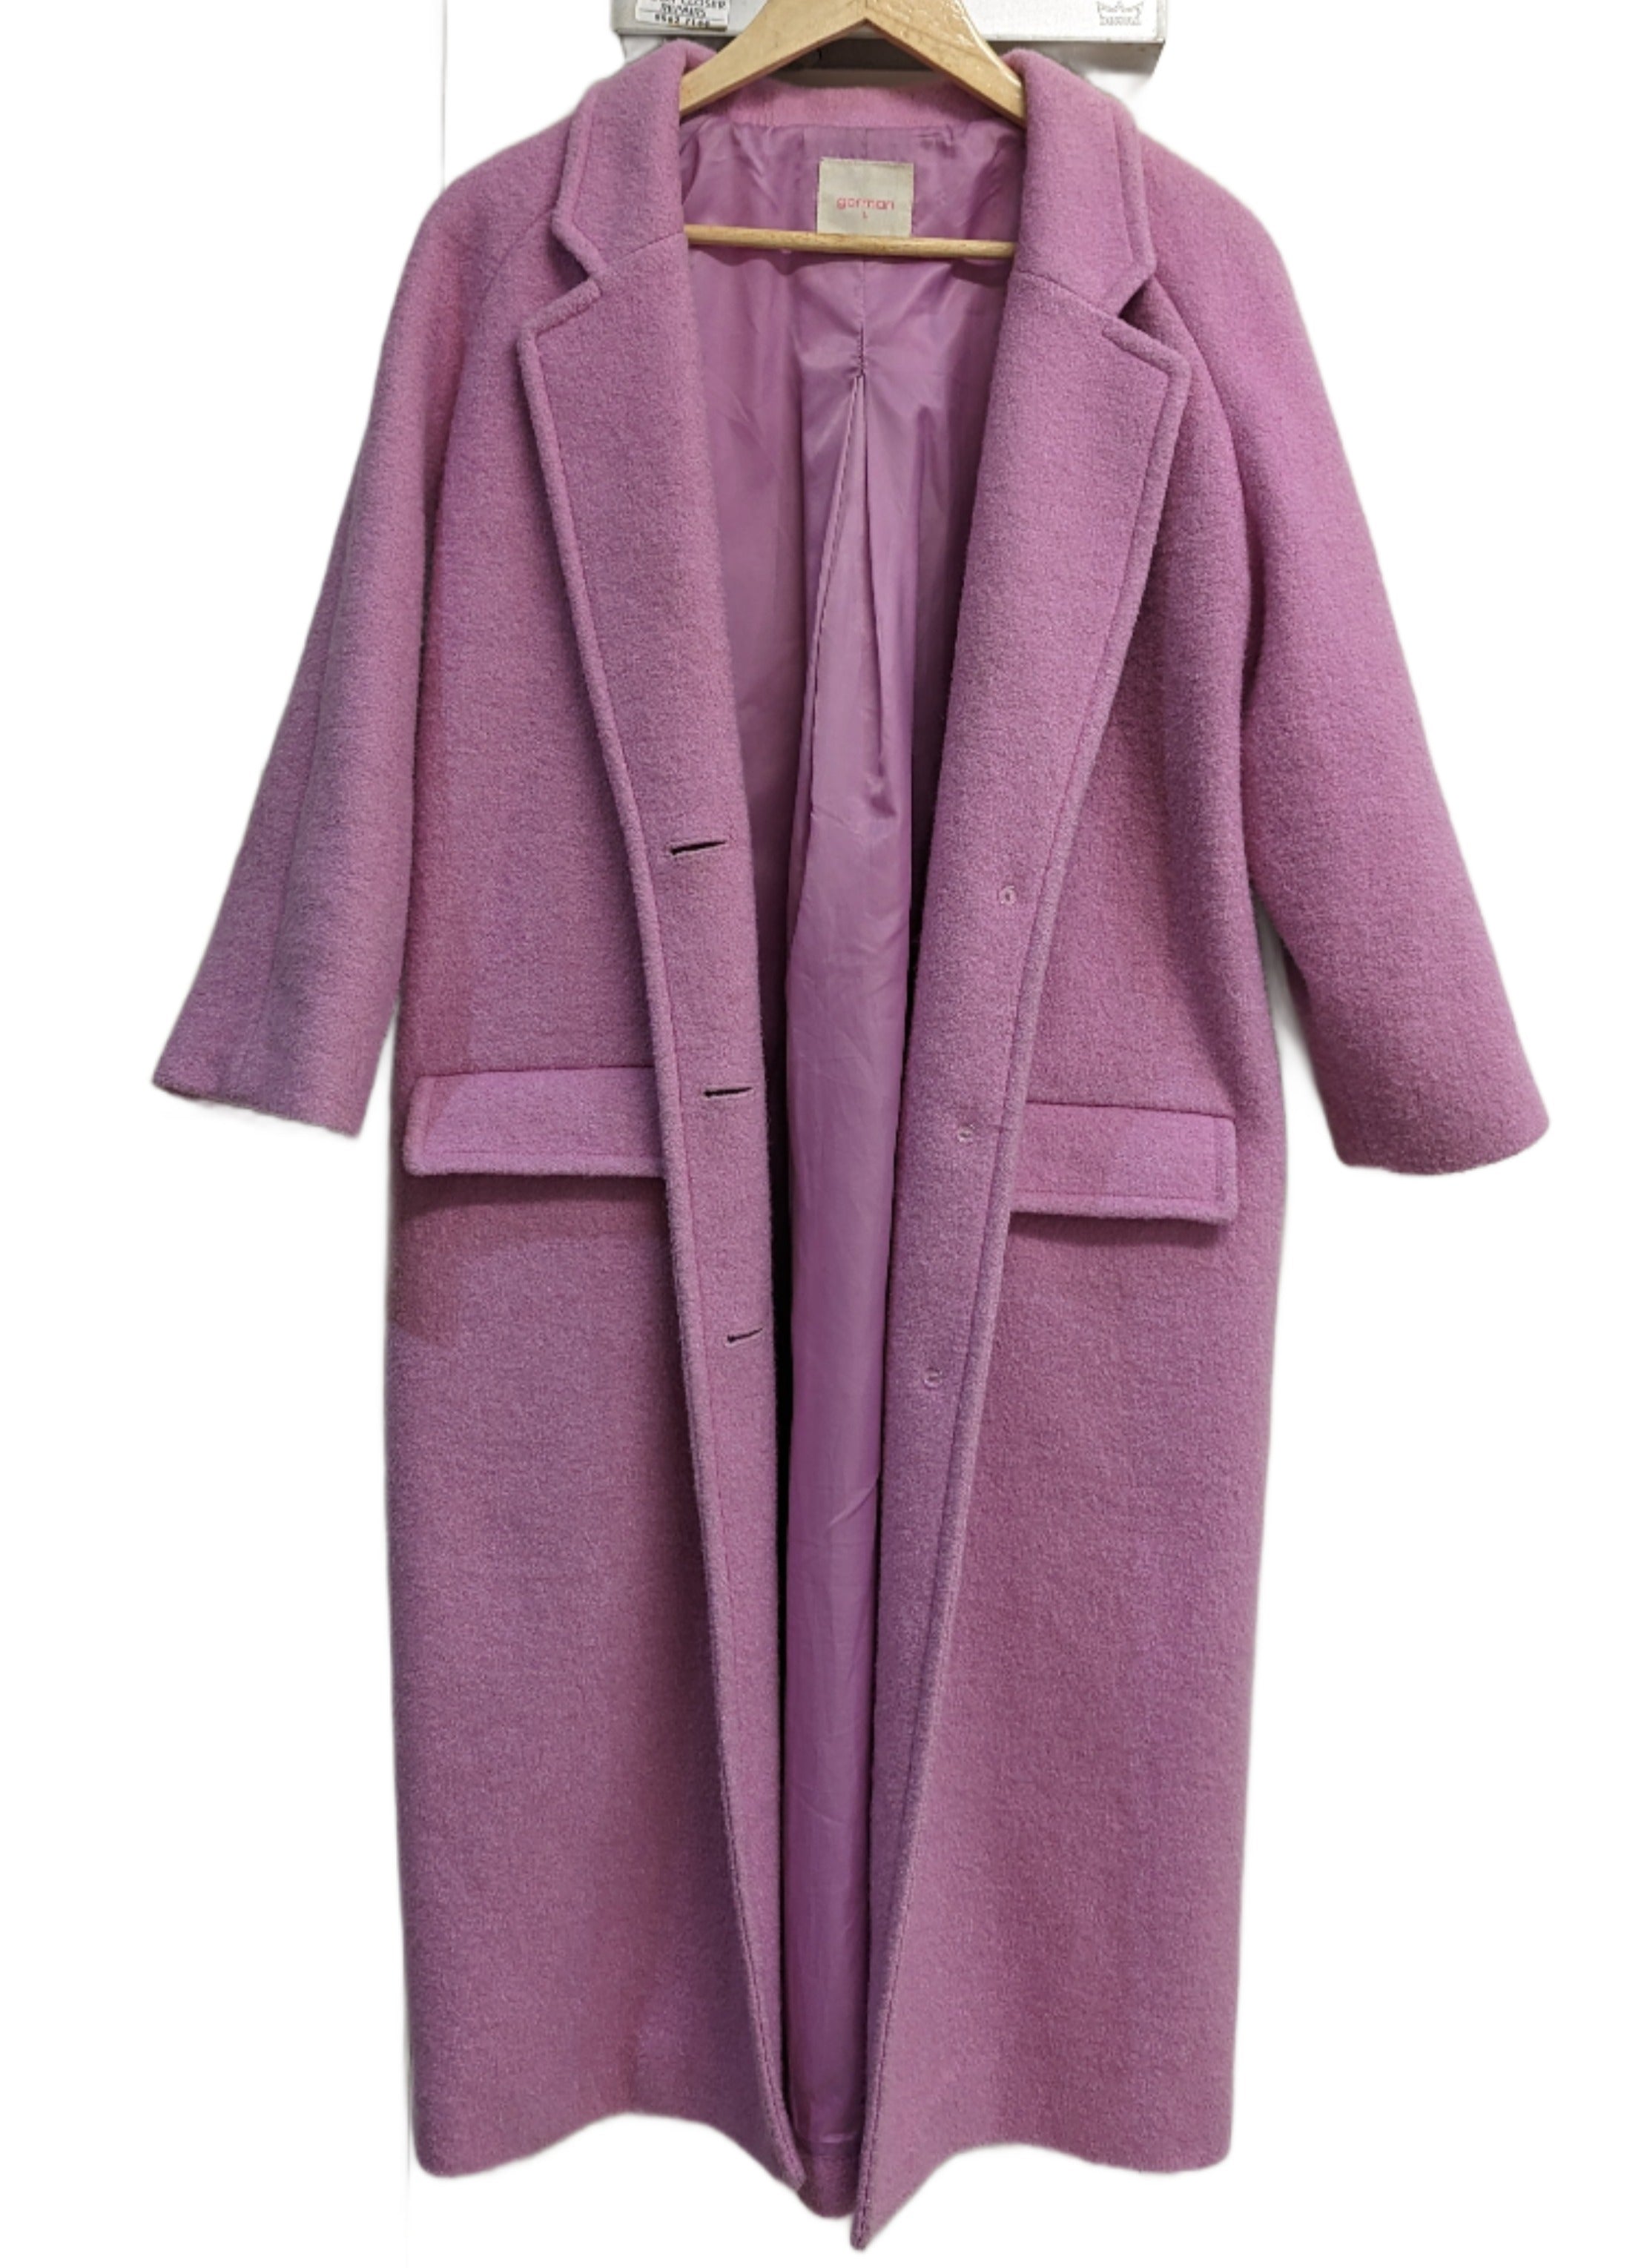 Gorman Pink Coat